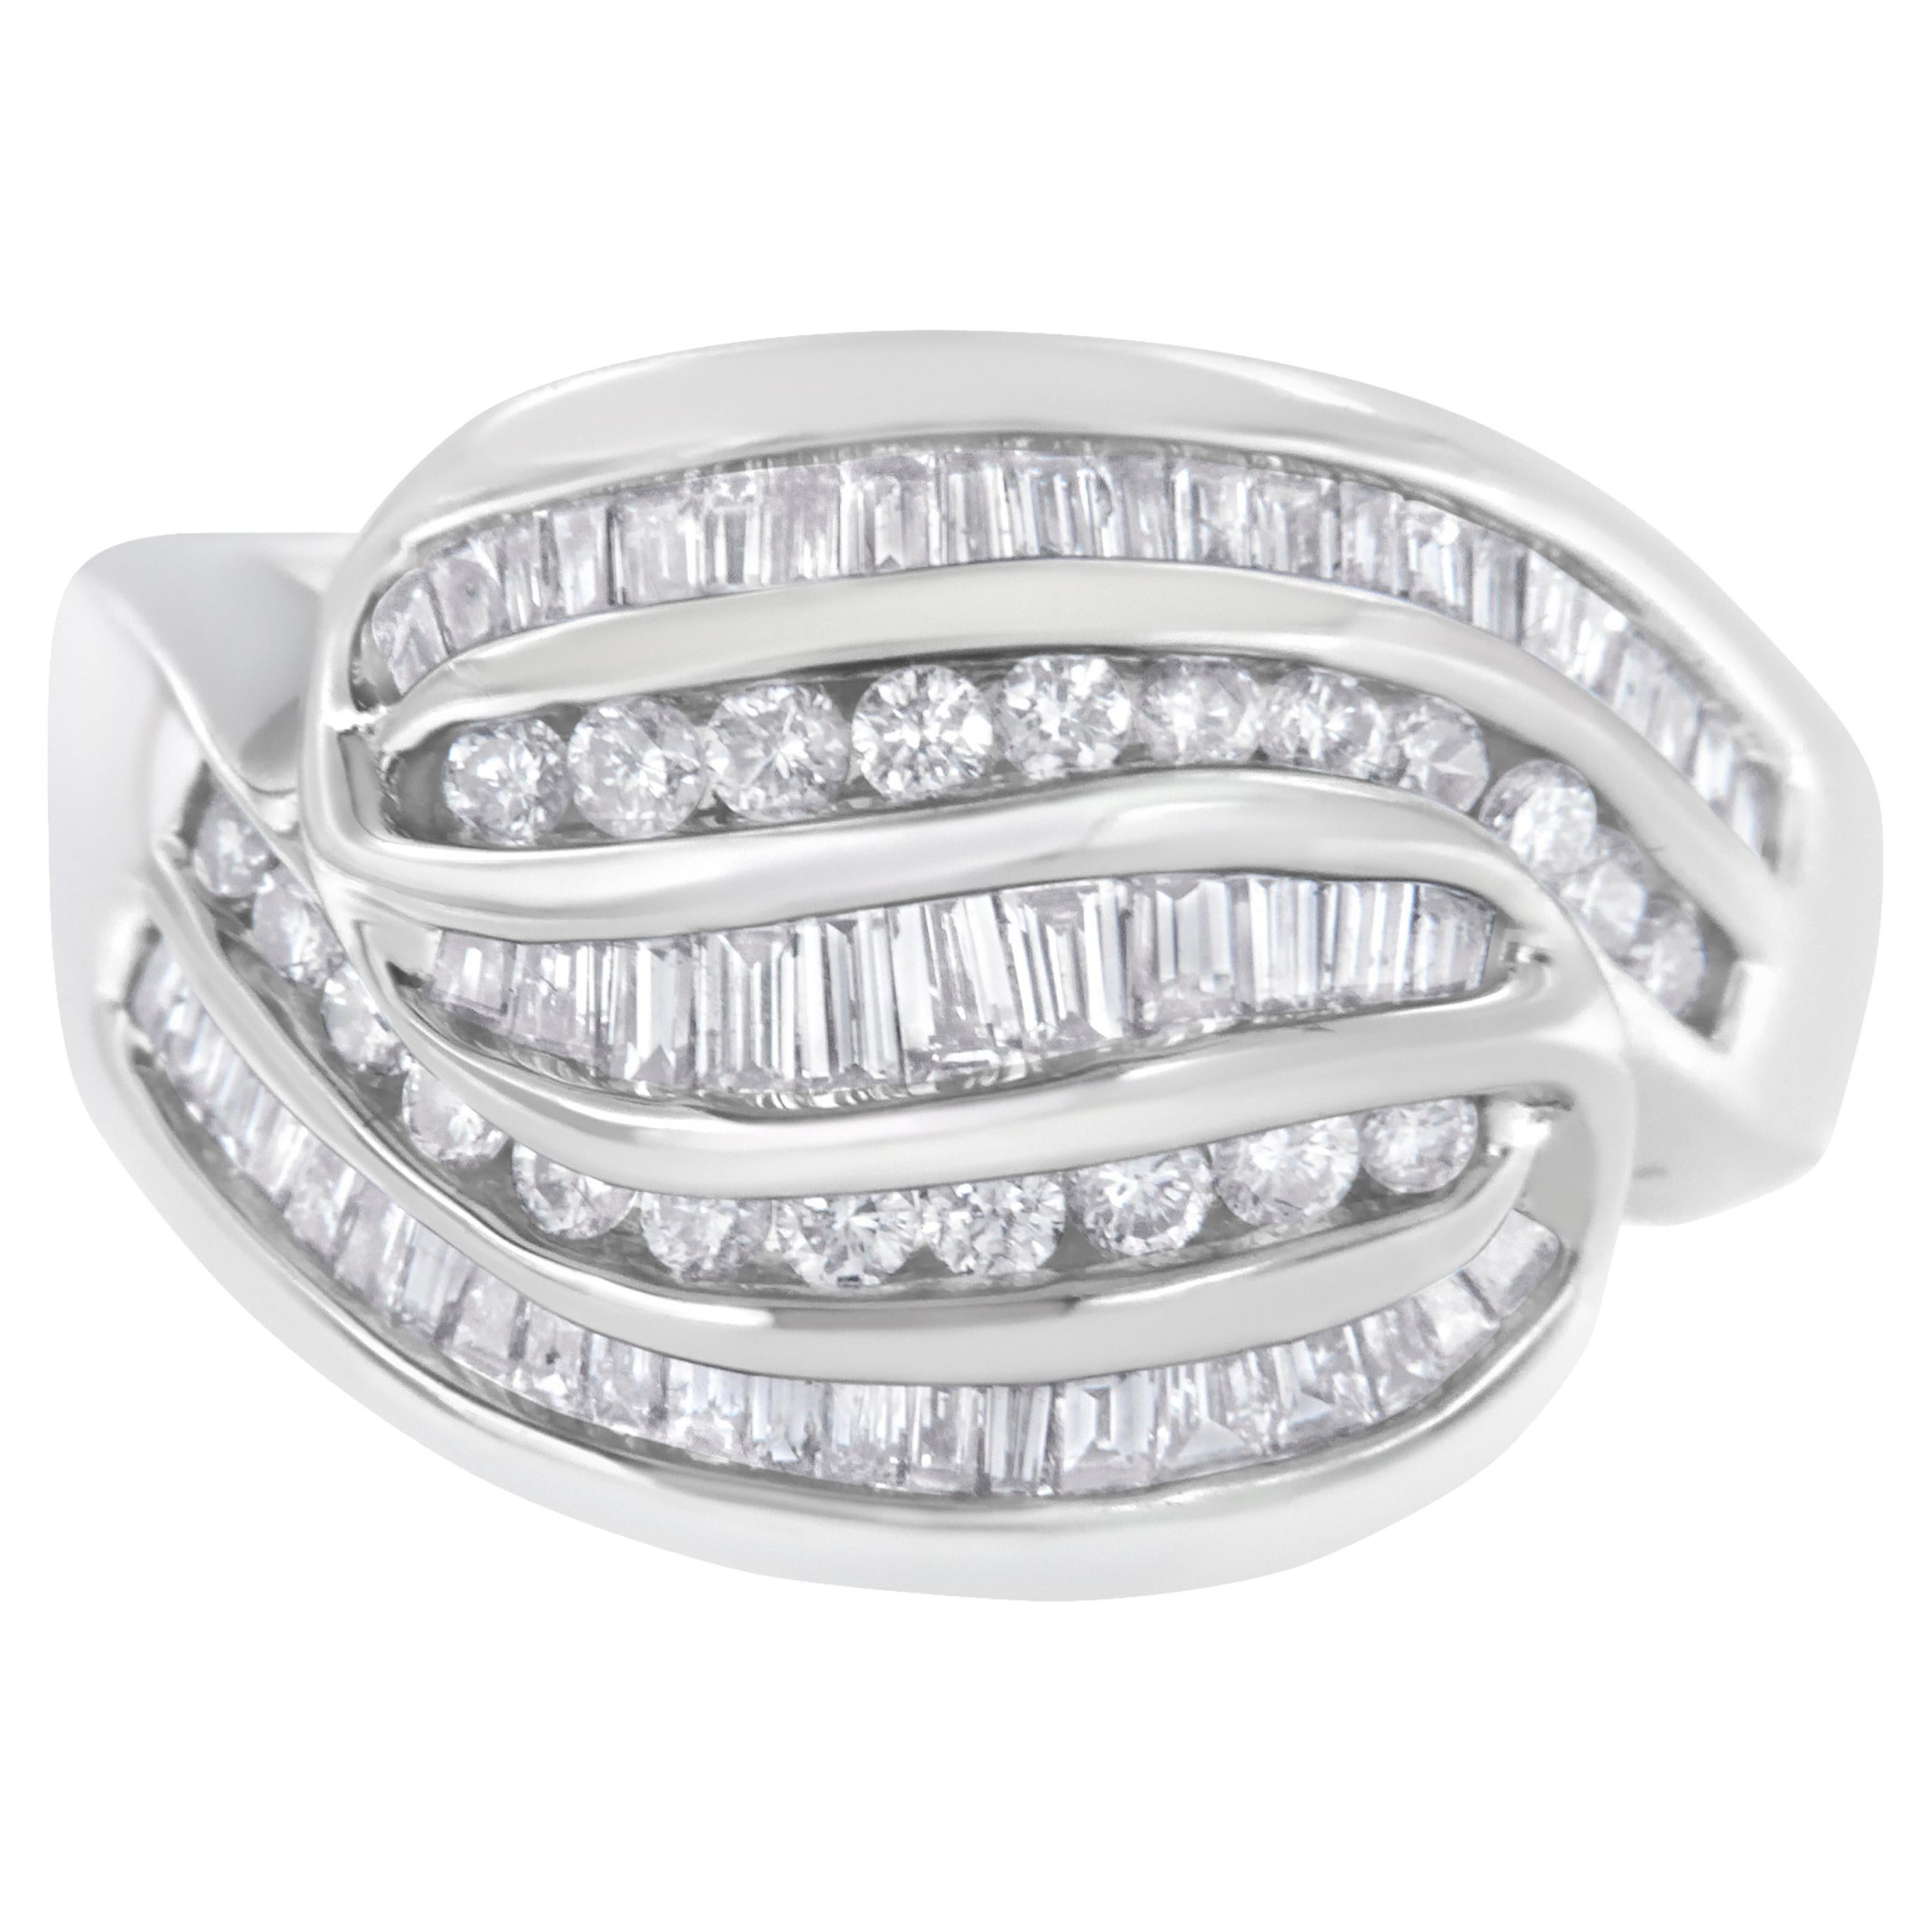 14K White Gold 1.0 Carat Diamond Bypass Band Ring